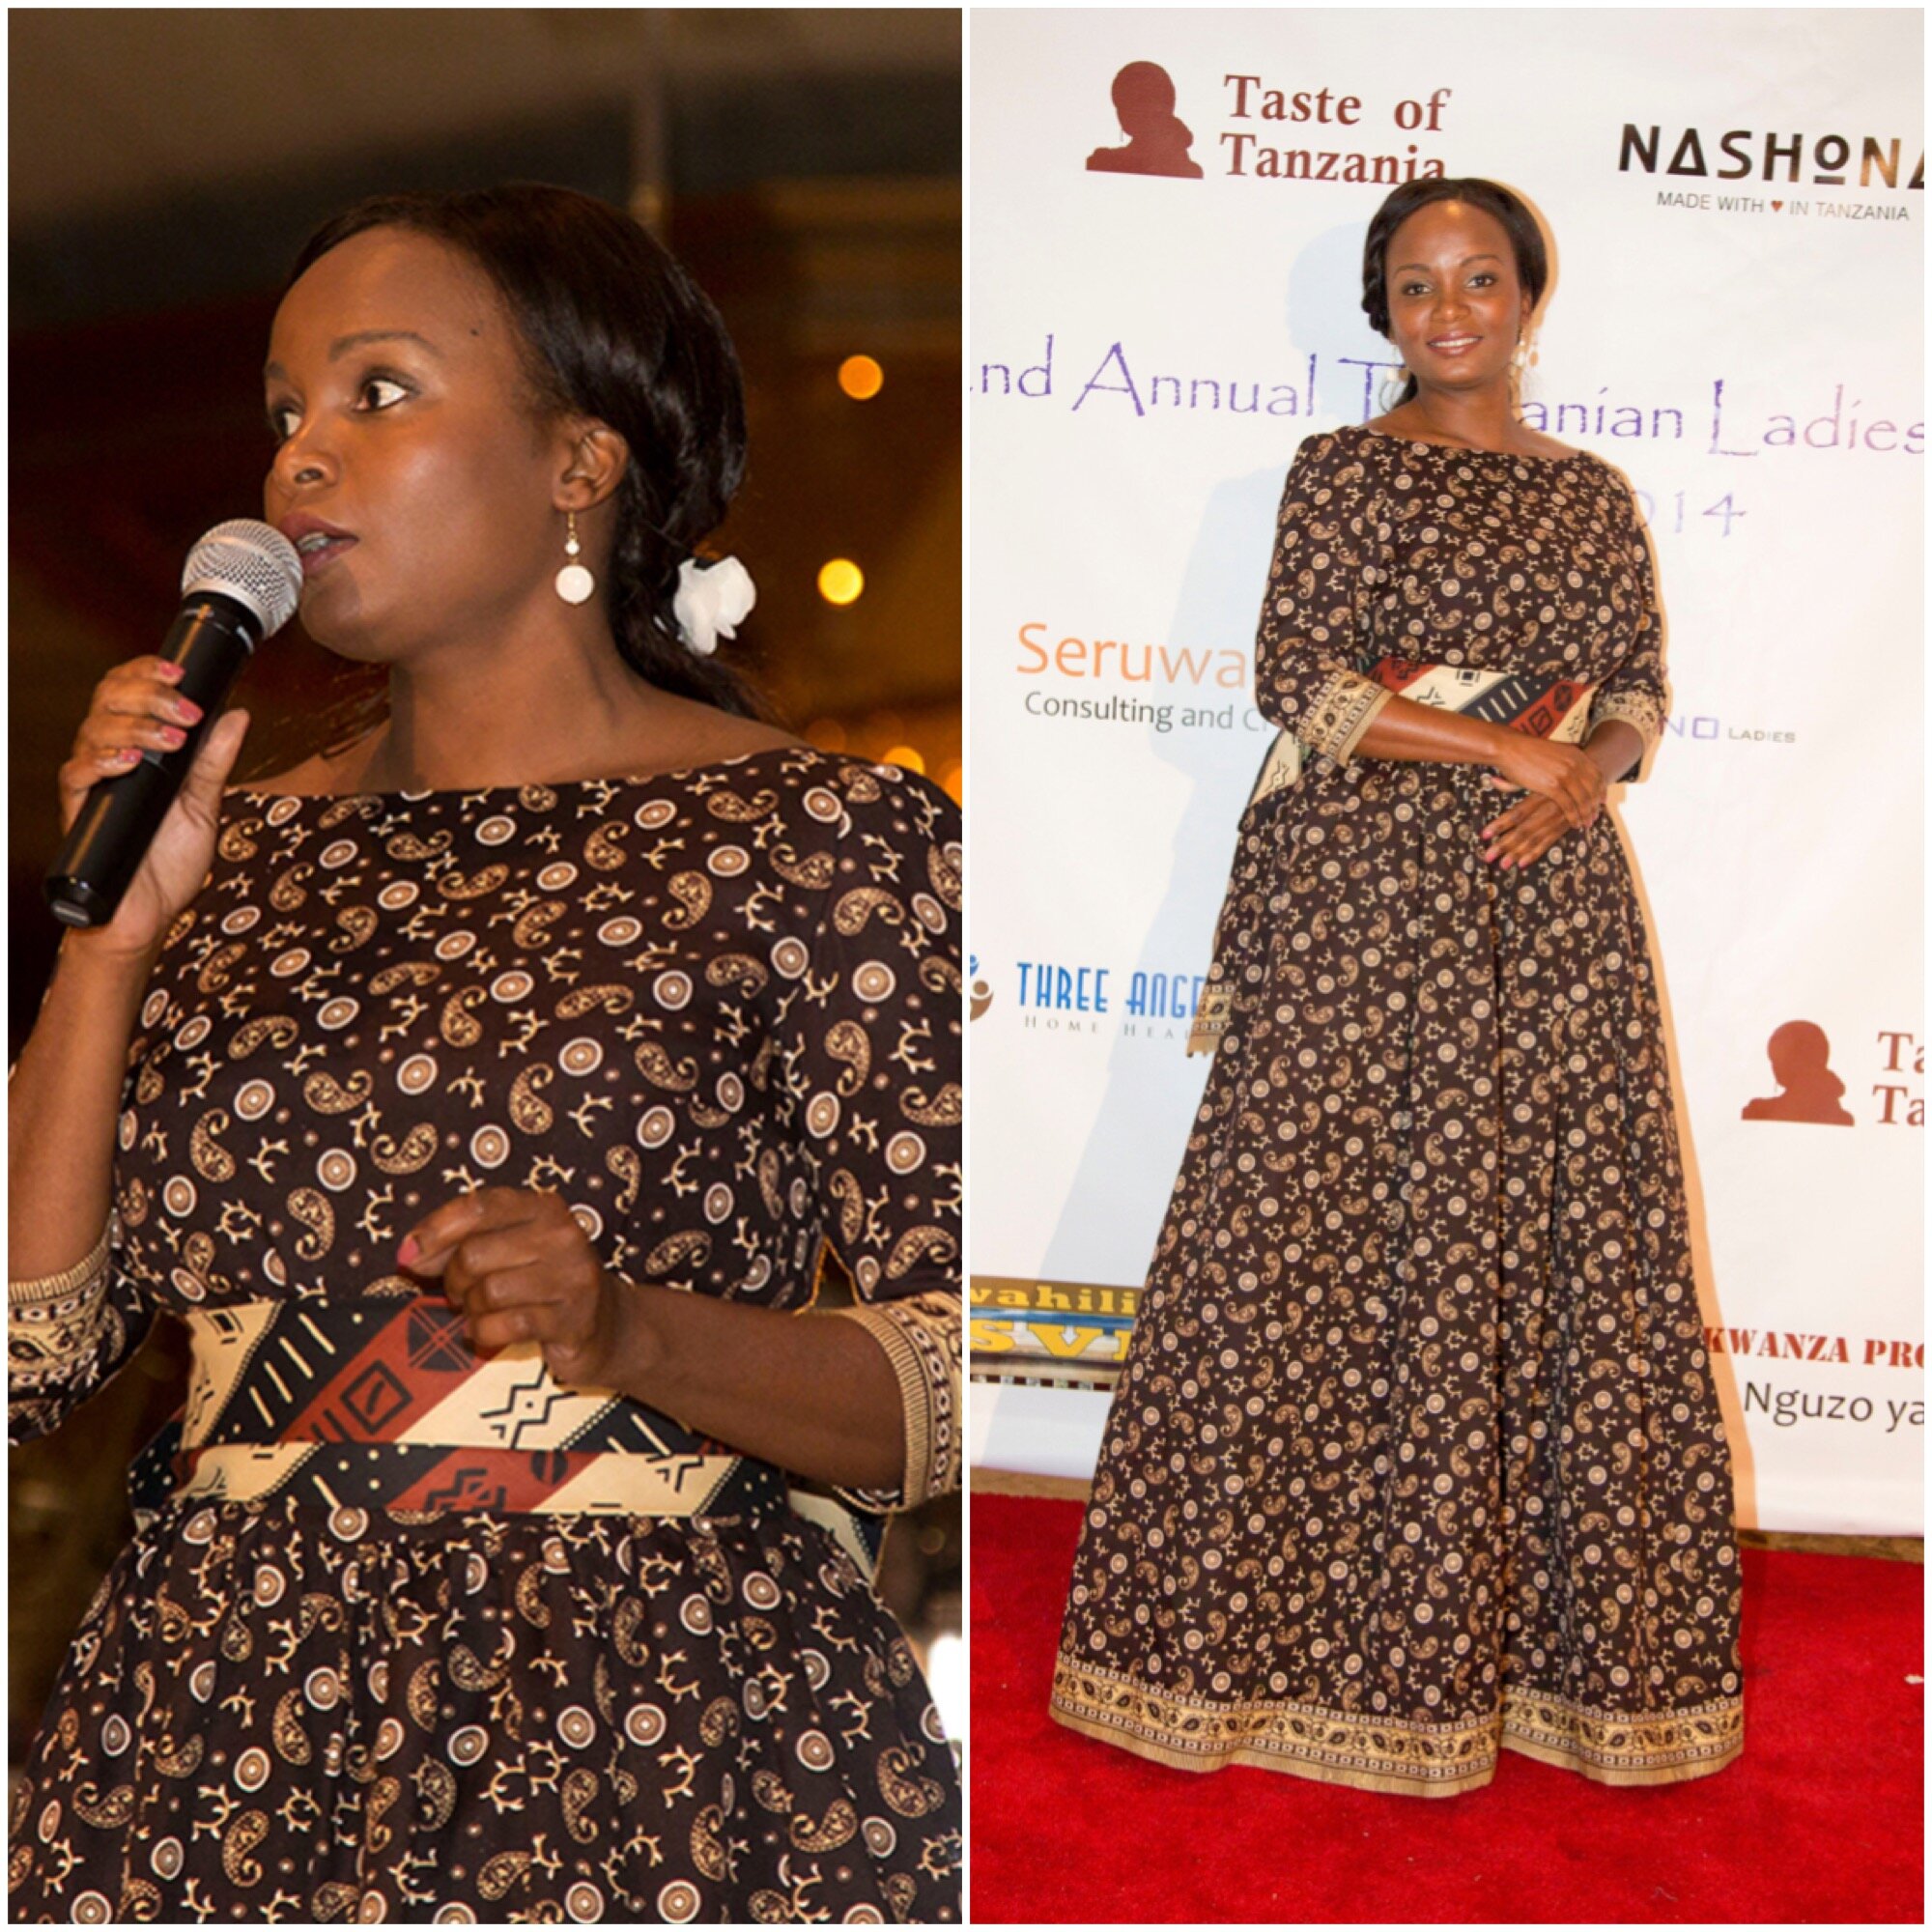 Miriam Kinunda author of Taste of Tanzania wearing one ofa kind African ethnic evening dress designed by Alis Fashion Design at Tanzanian Ladies Night.JPG